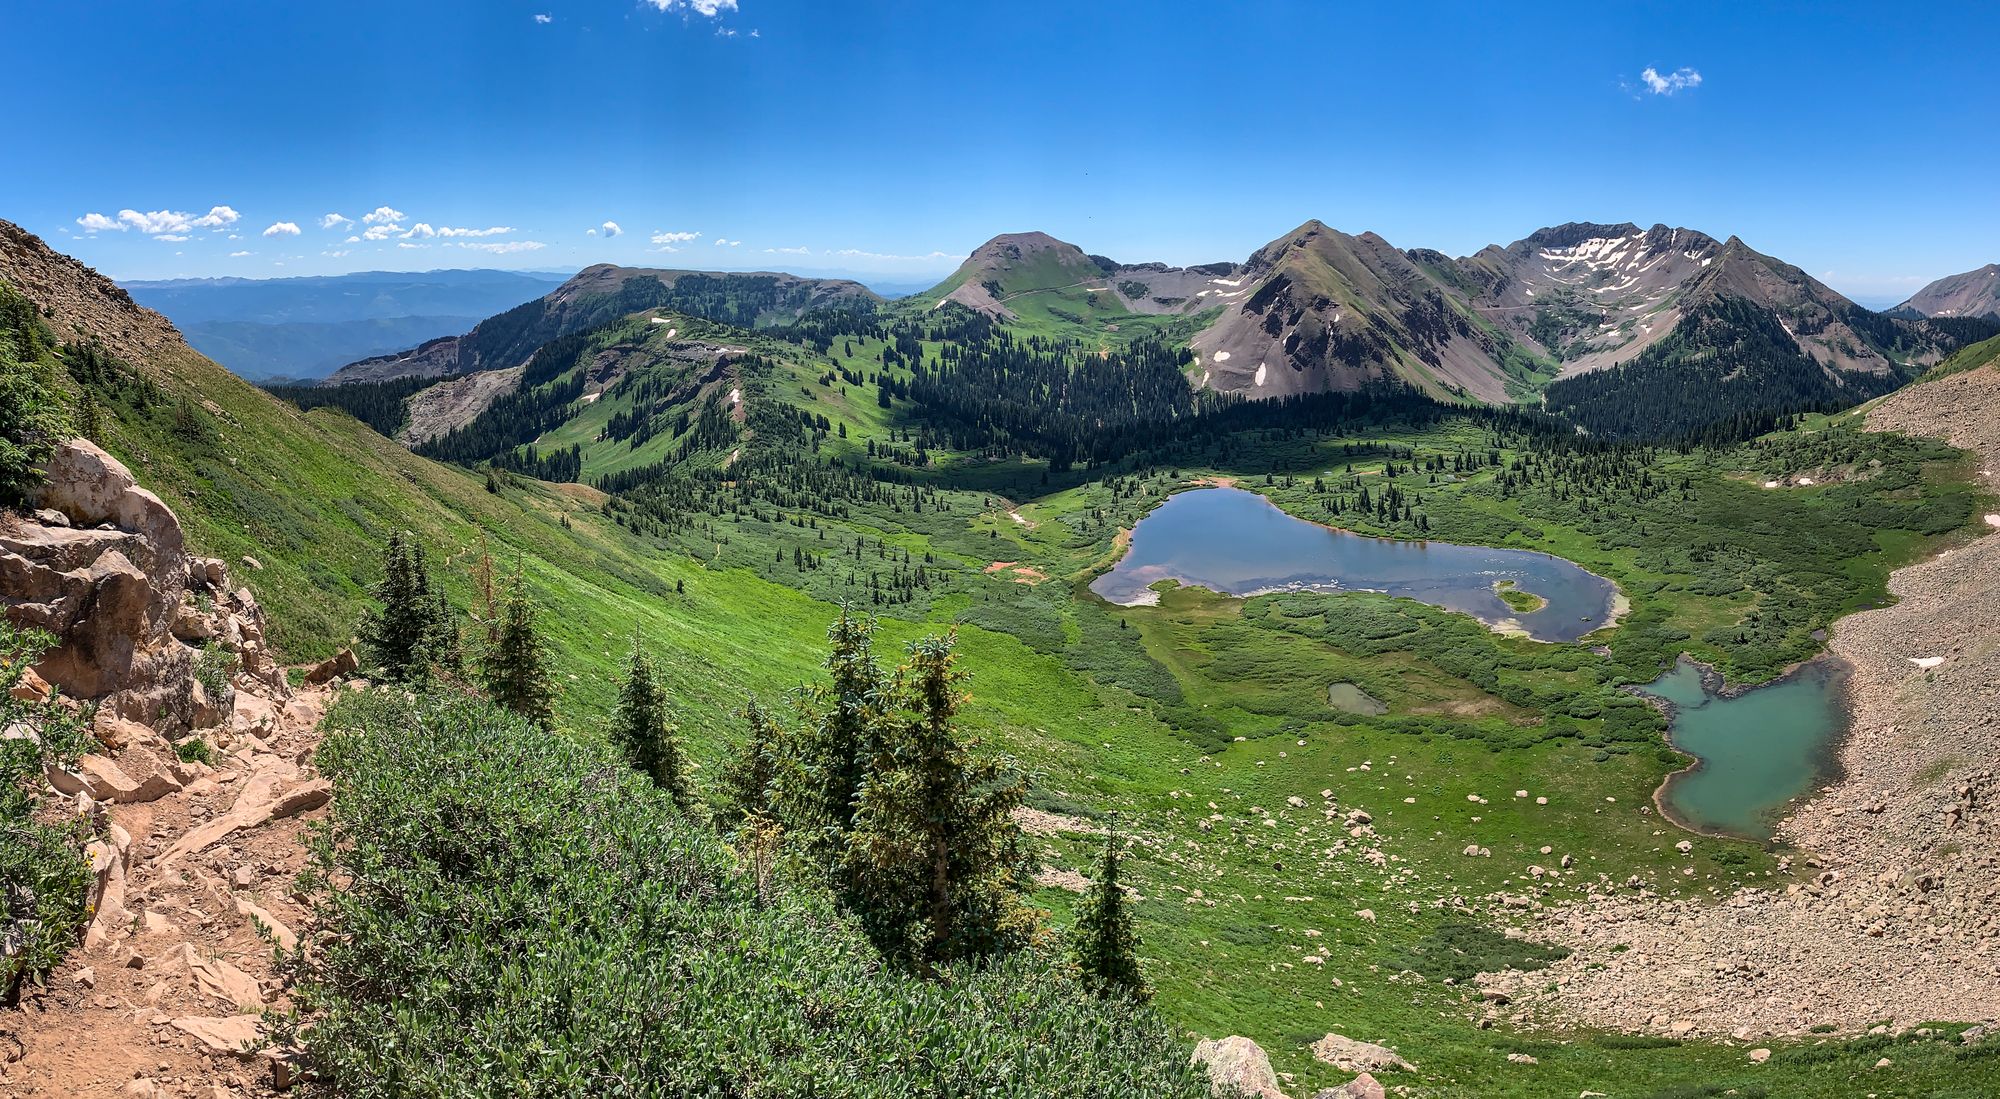 Colorado Trail - napříč Rocky Mountains (3)